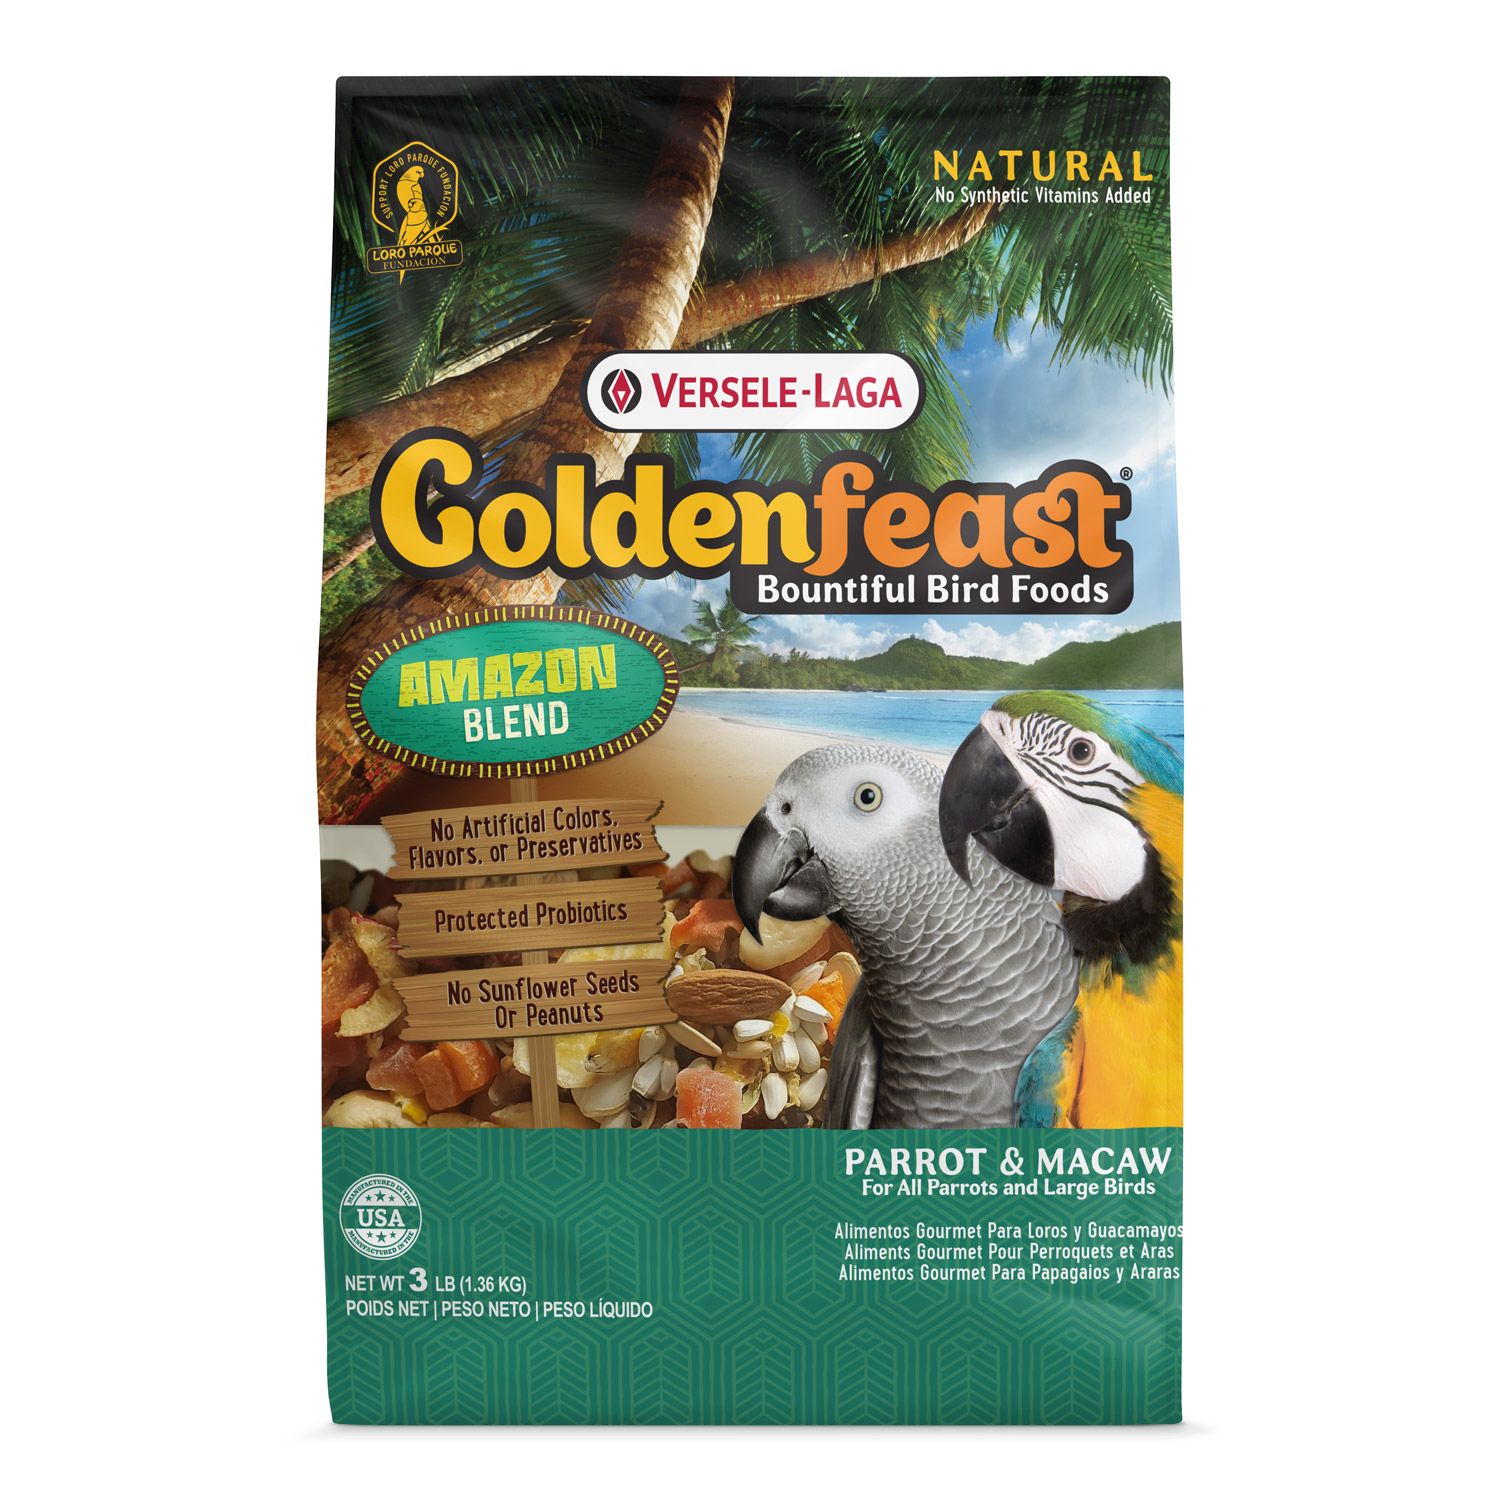 VL Goldenfeast Amazon Blend, 3 lb Bag